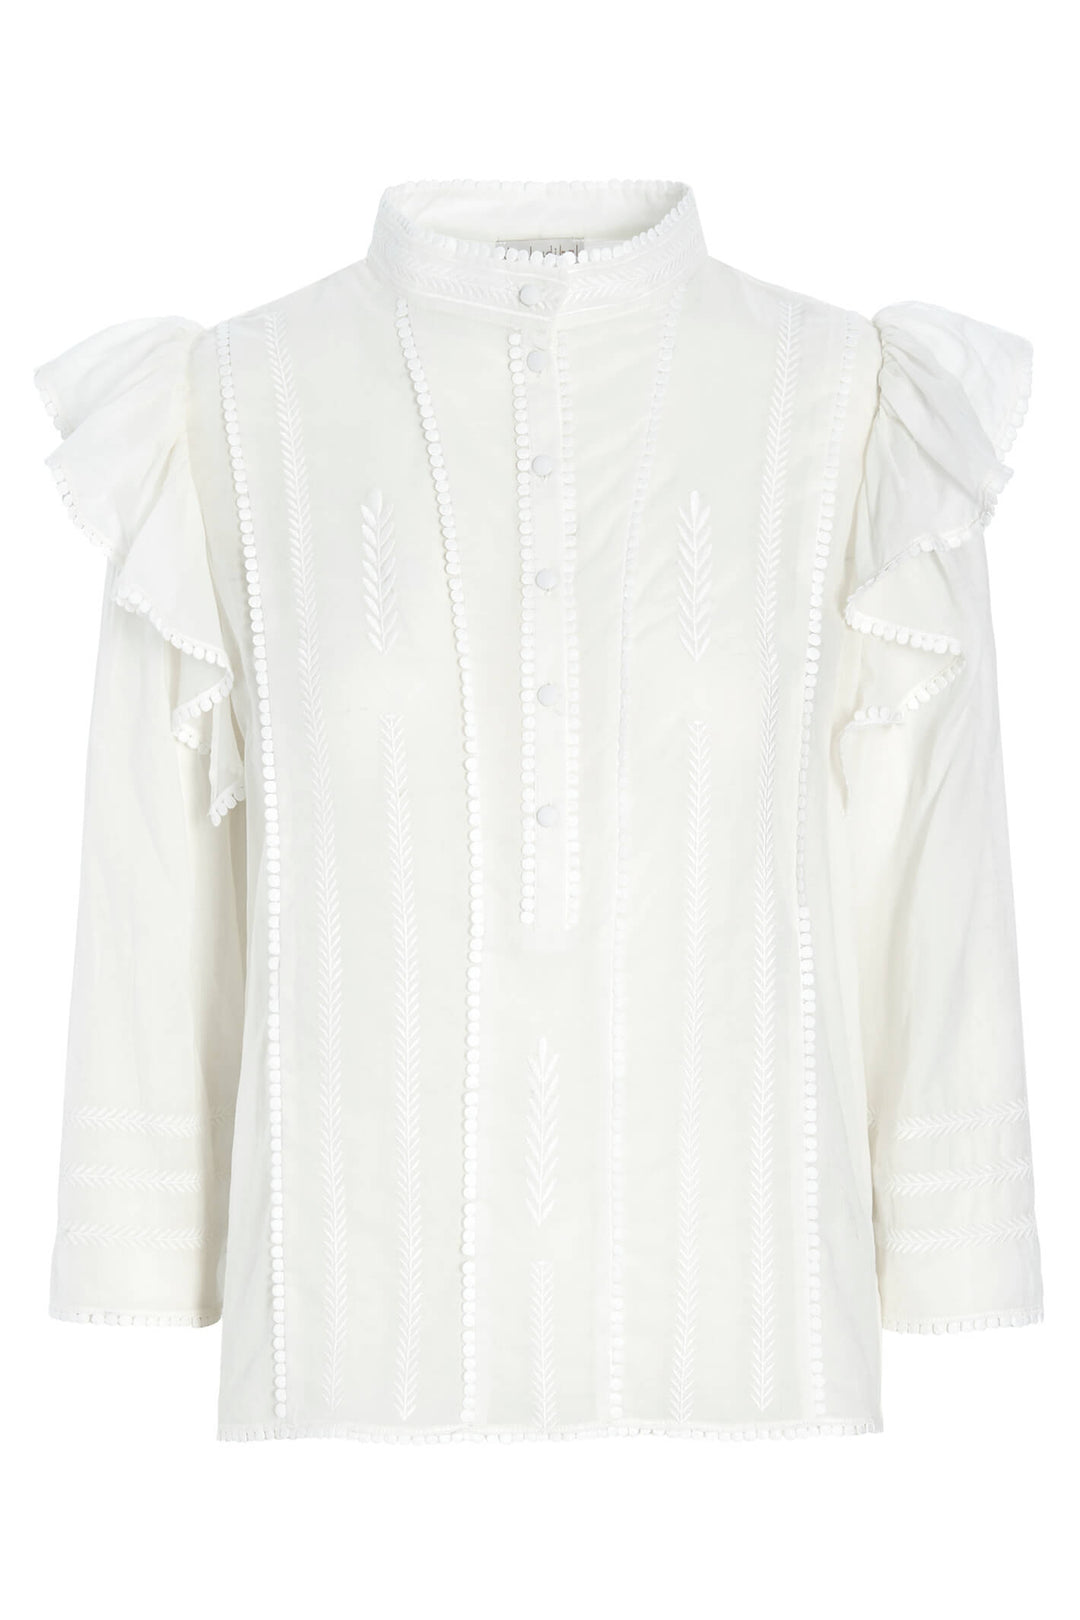 Dea Kudibal 1780723 Wenda NS Natural White Cotton Blouse - Olivia Grace Fashion